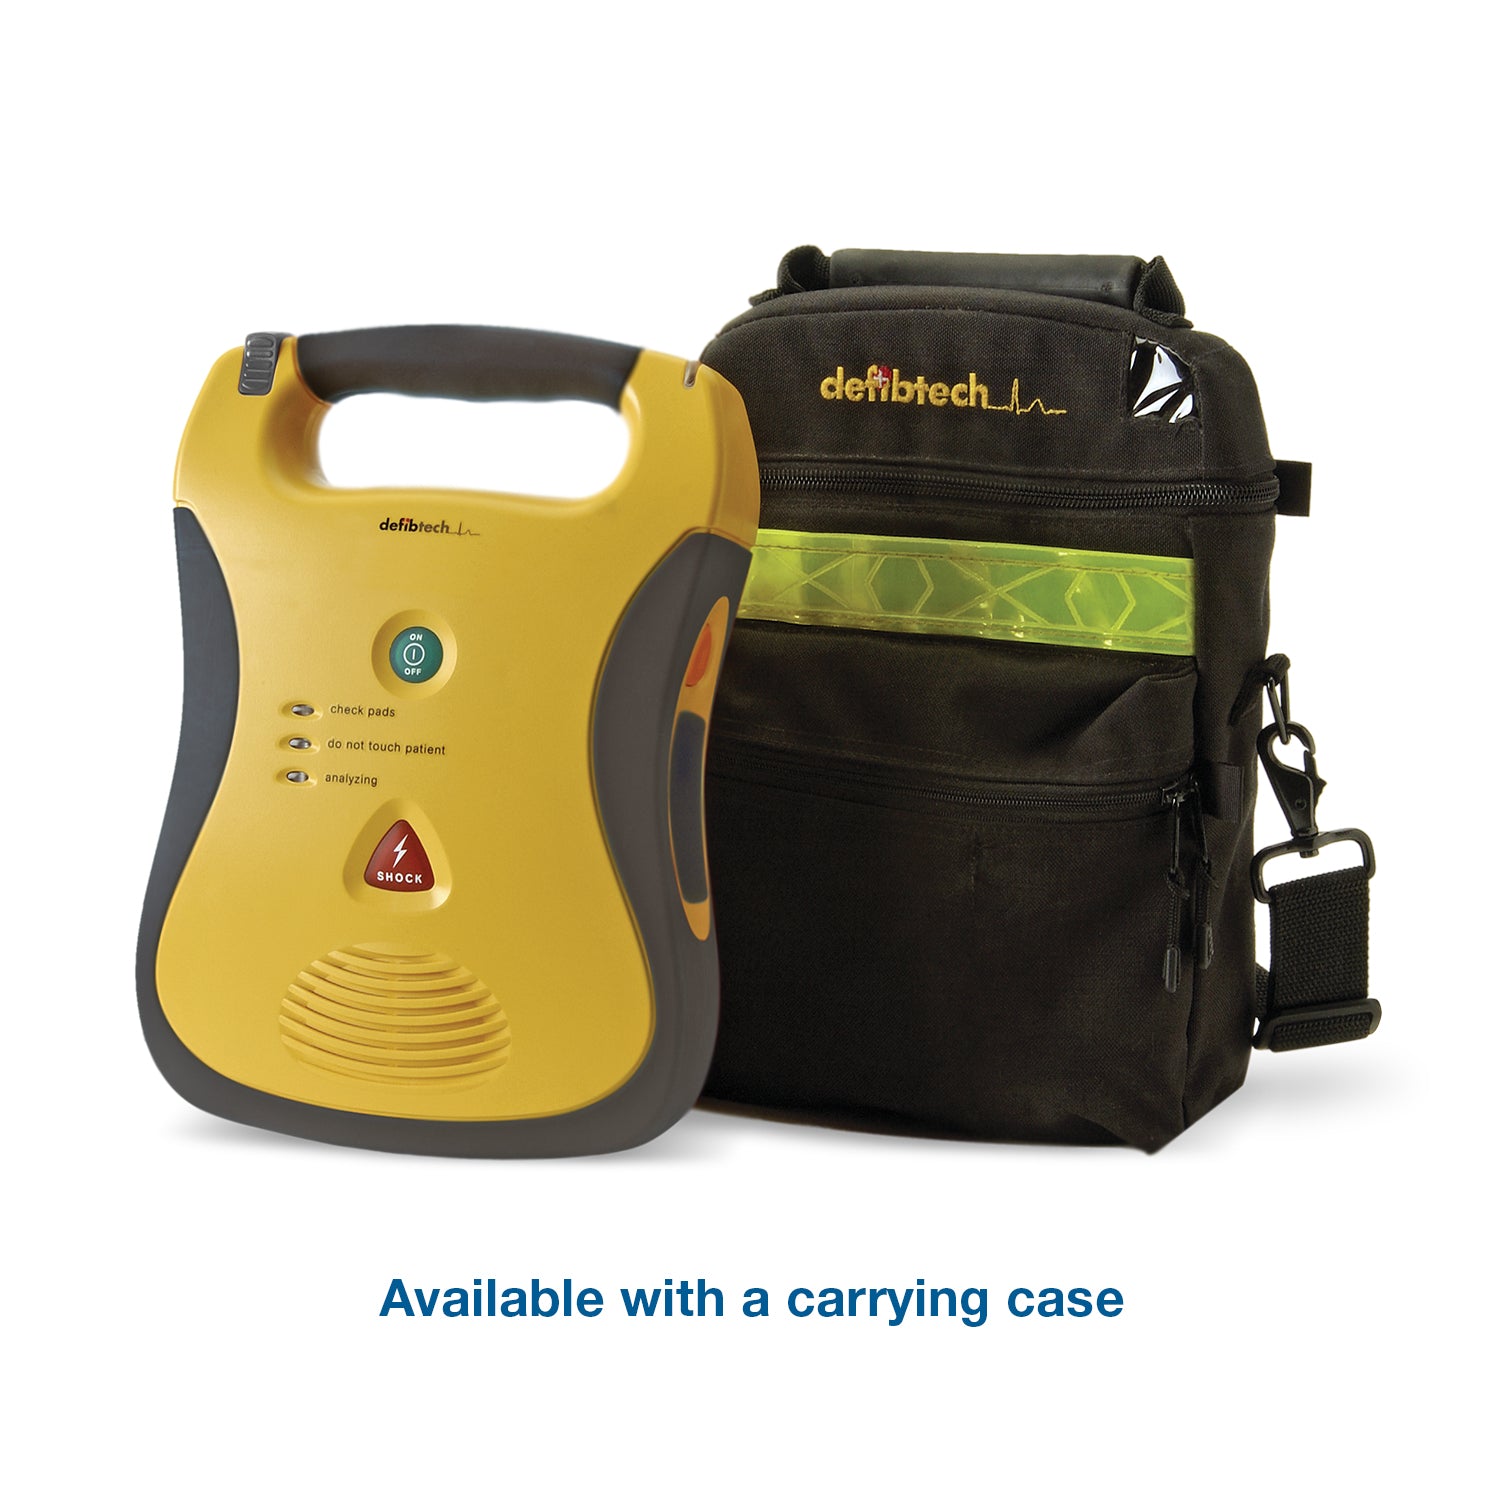 DefibTech LifeLine AED